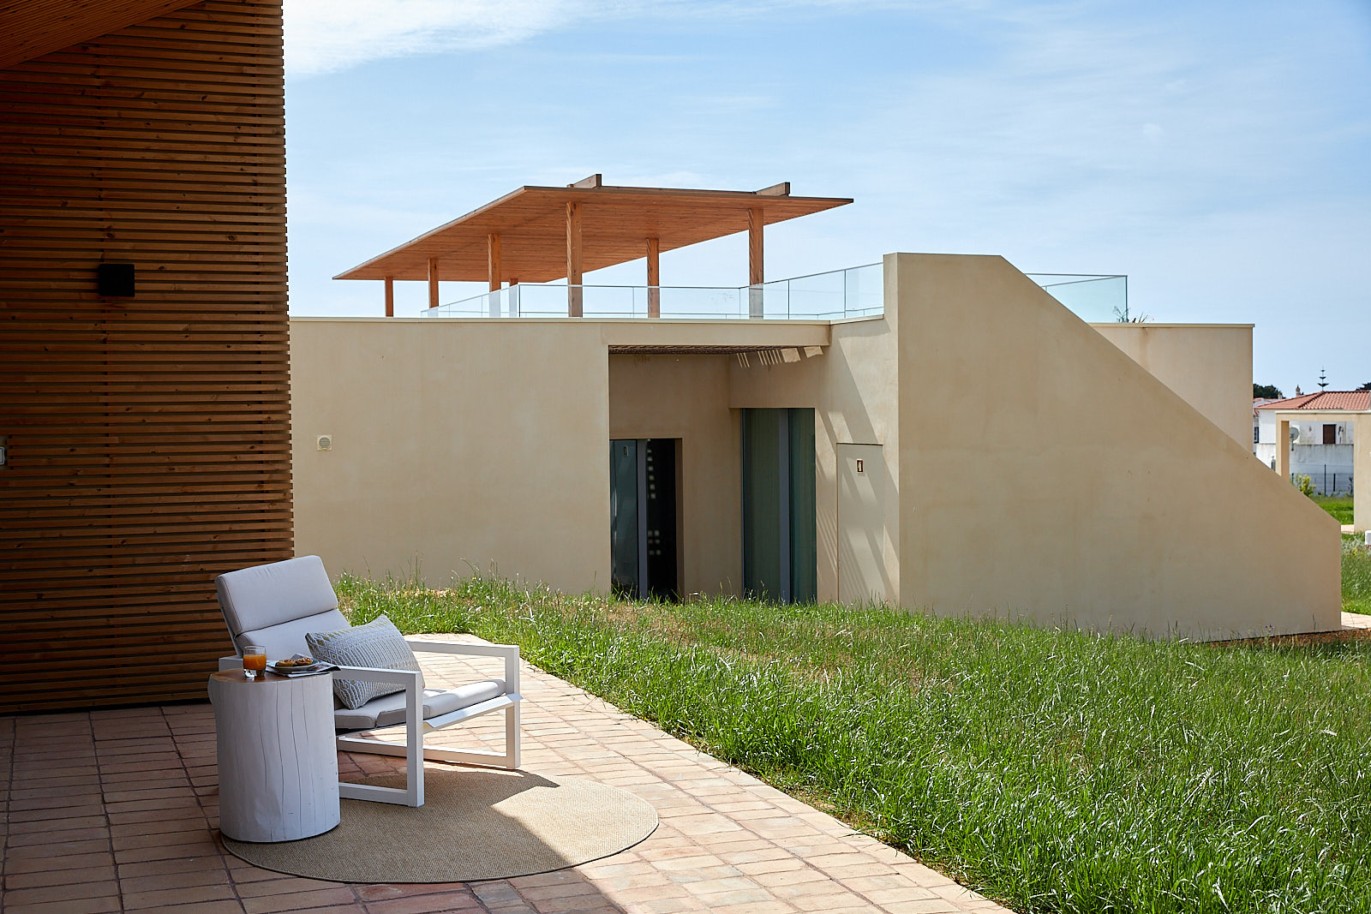 2 bedroom apartment in resort, for sale in Porches, Algarve_229198